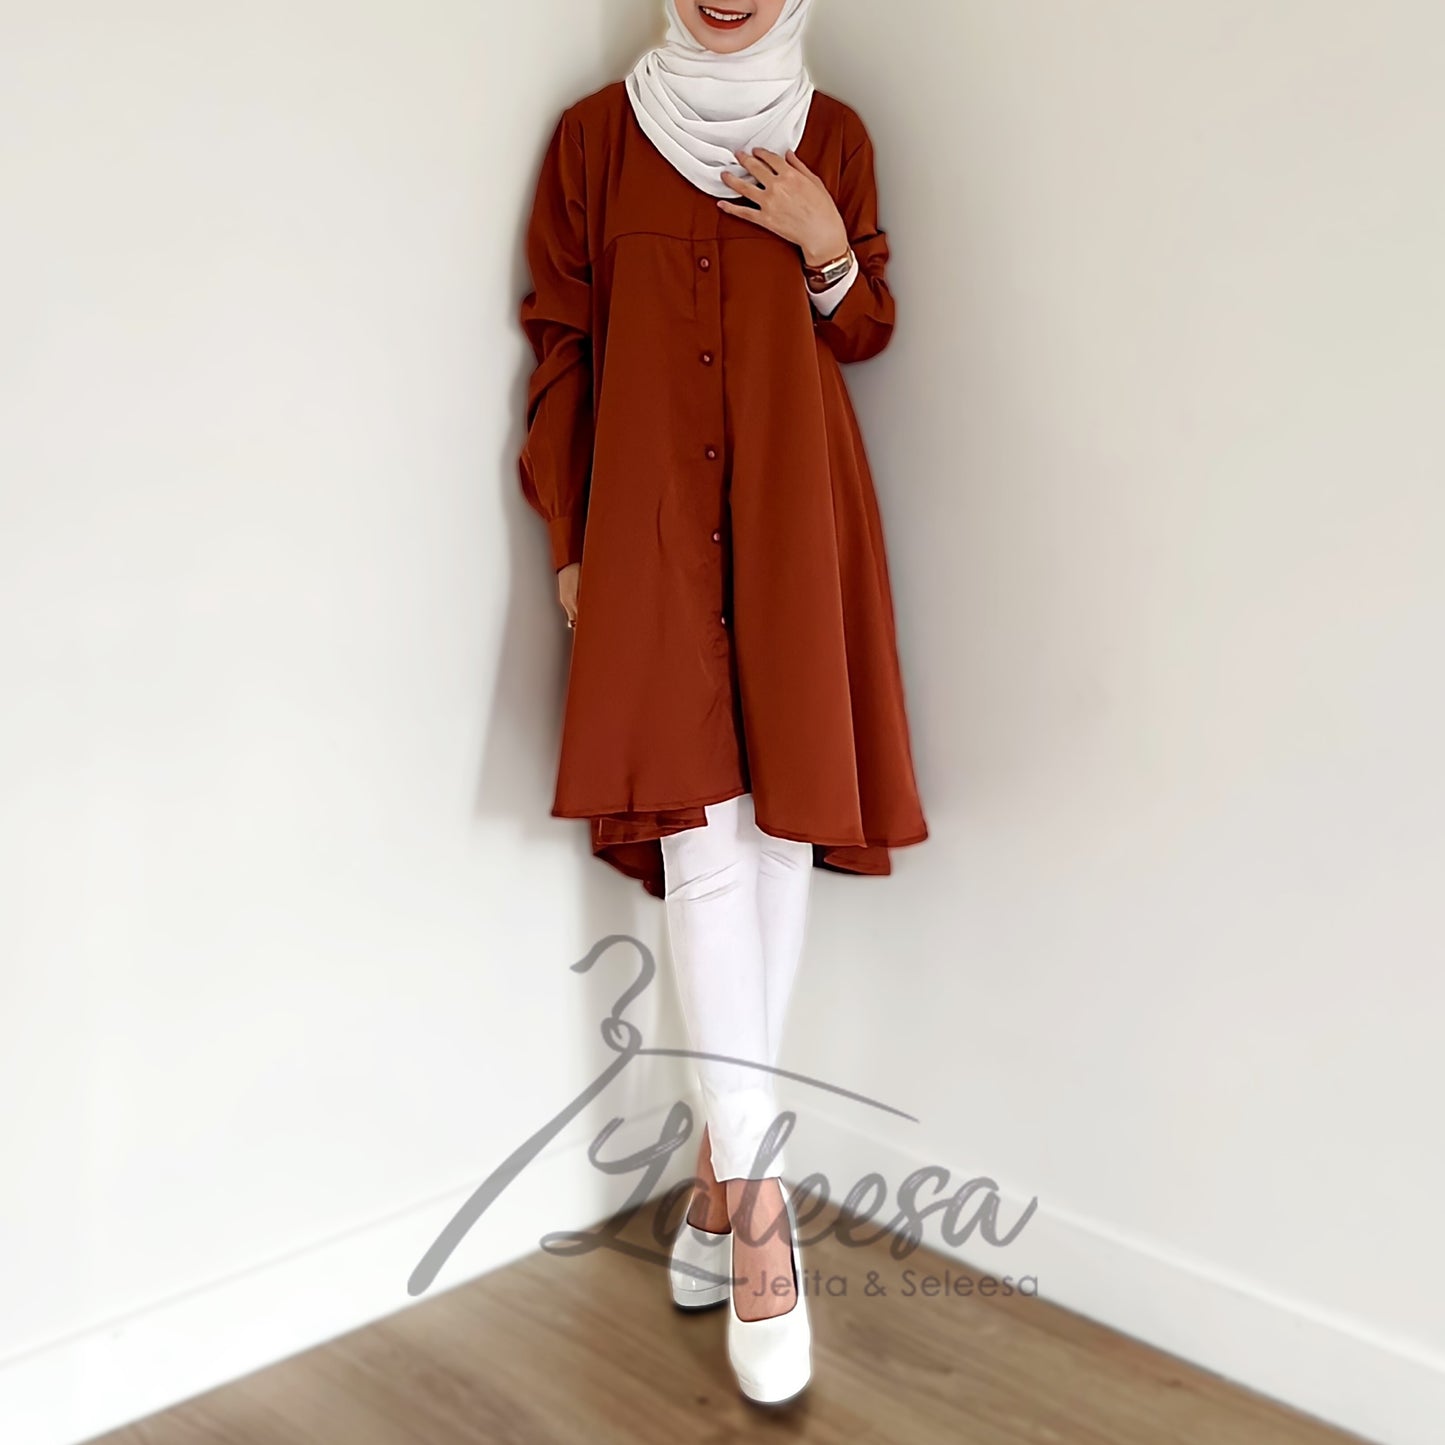 LALEESA BLOUSE TIRANA TB411372 <BF Friendly Series> Blouse Muslimah Blouse Women Blouse Baju Muslimah Baju Perempuan